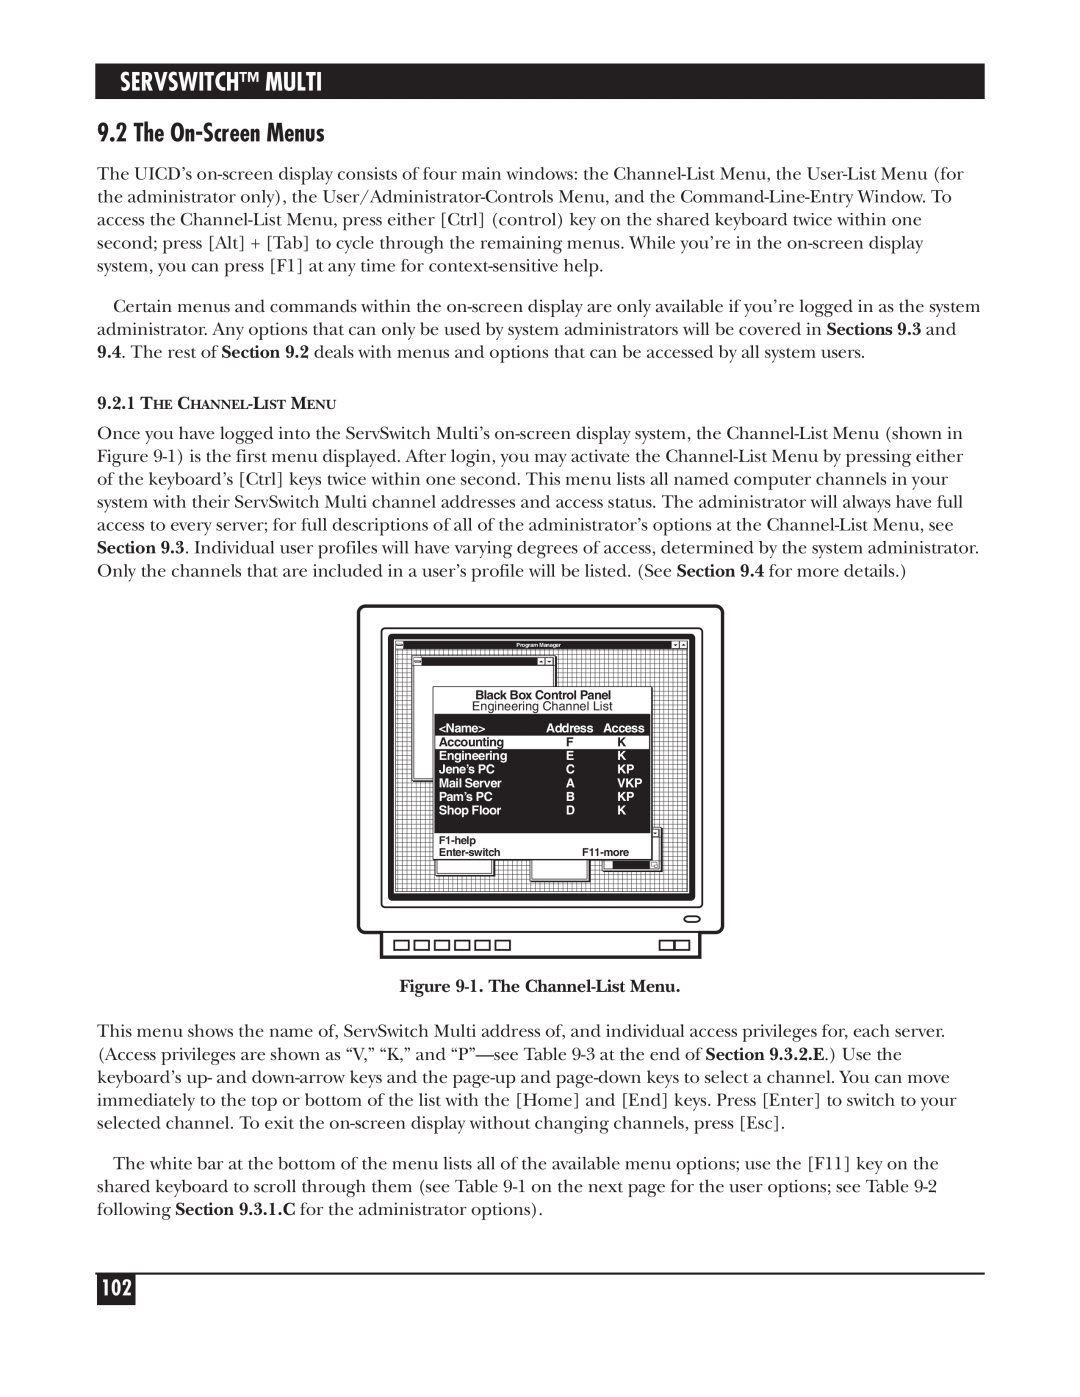 Black Box KV162A manual The On-Screen Menus, Servswitch Multi, 1. The Channel-List Menu 